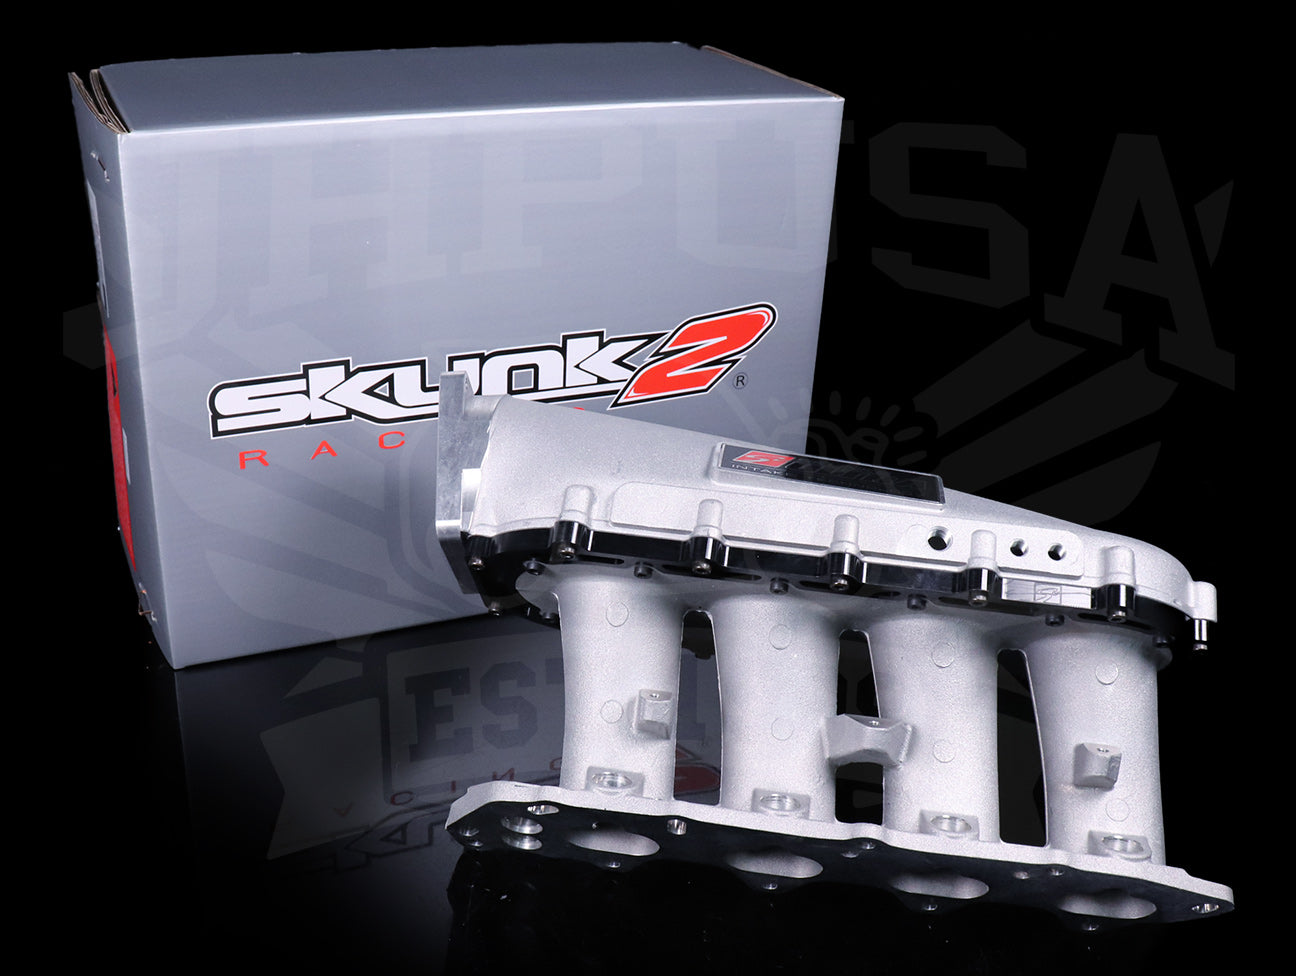 Skunk2 Ultra Series Intake Manifold (Black Spacer) - B-series VTEC